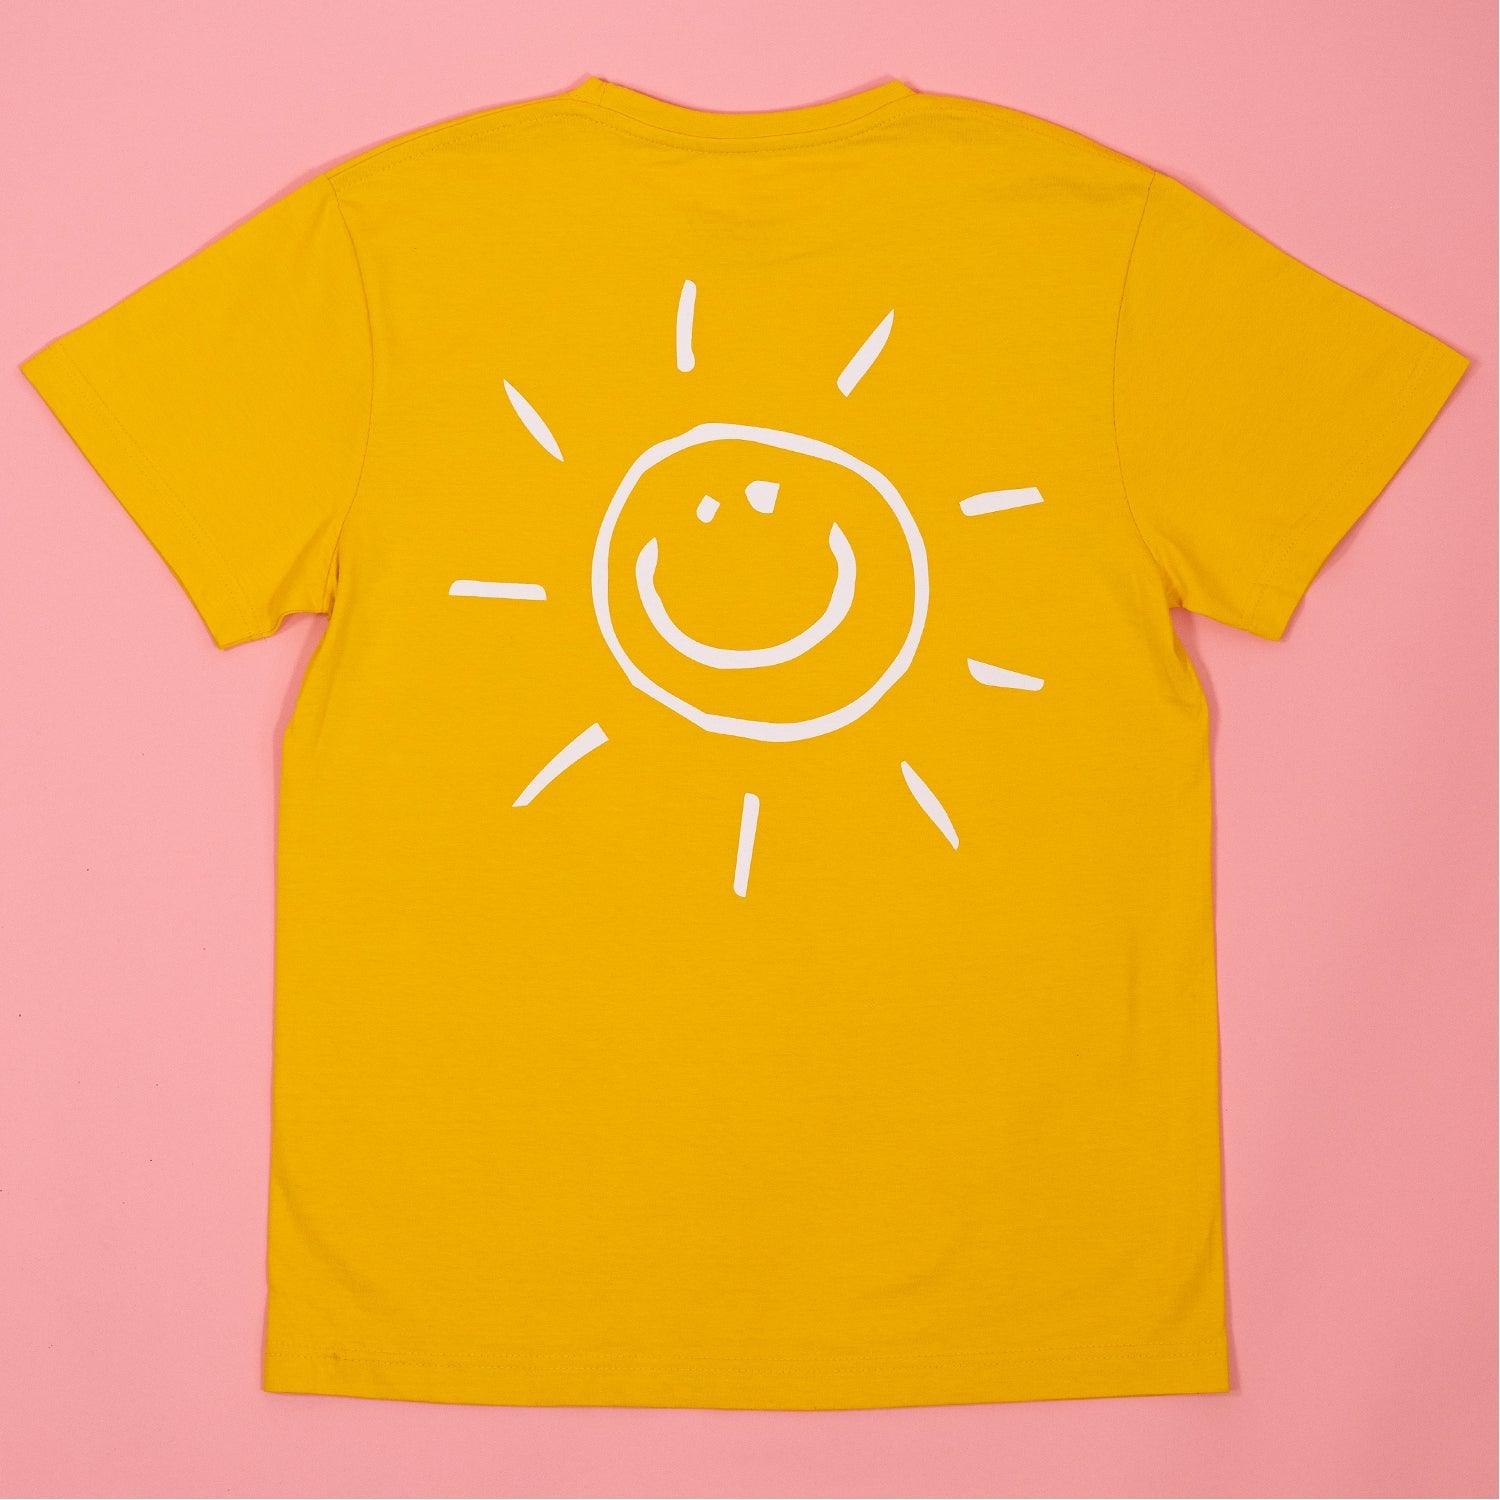 Noski Noski: T-shirt de style sourire